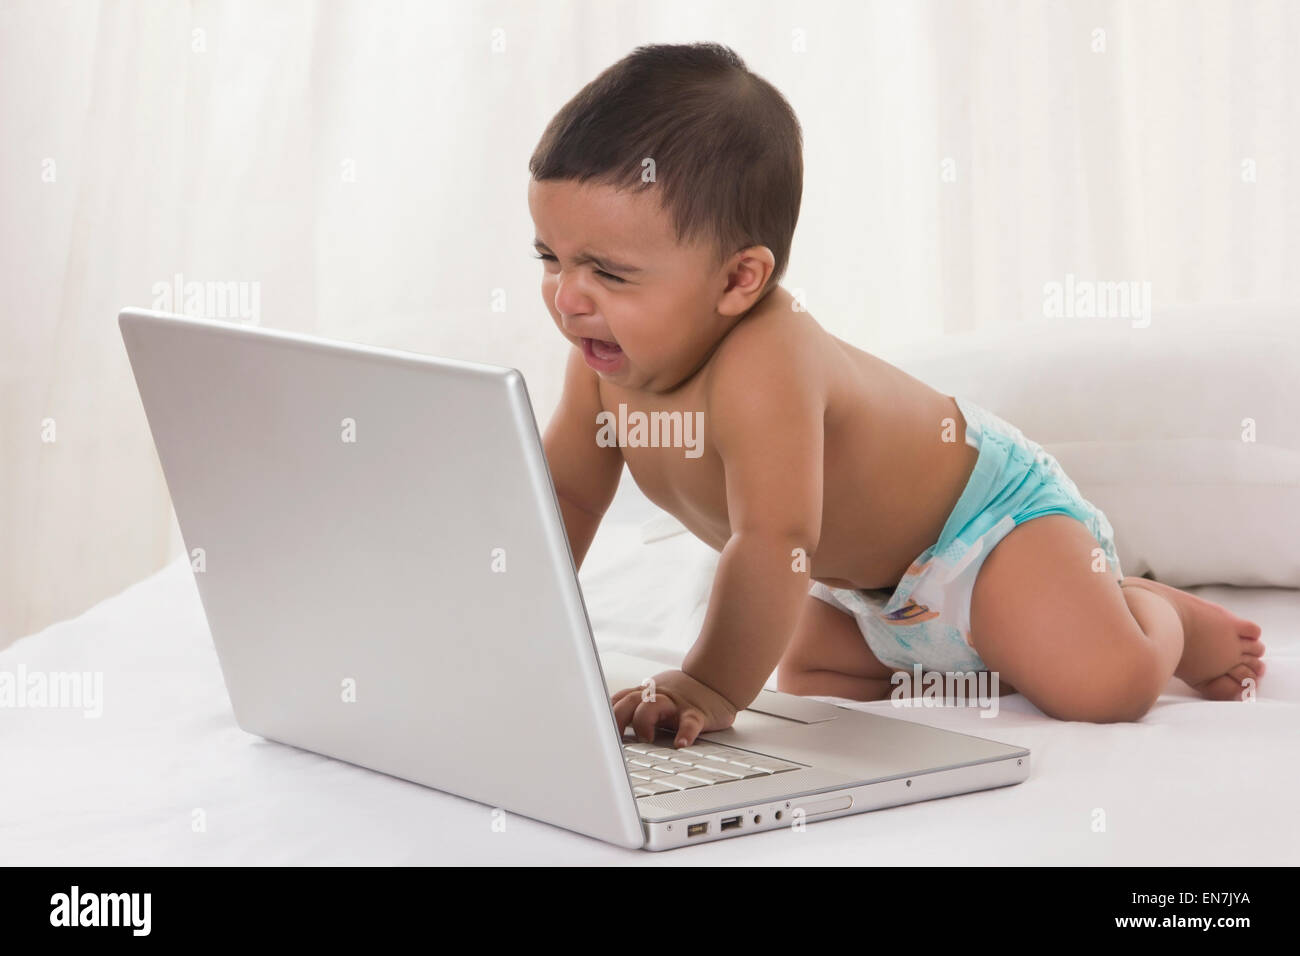 baby-with-laptop-crying-EN7JYA.jpg